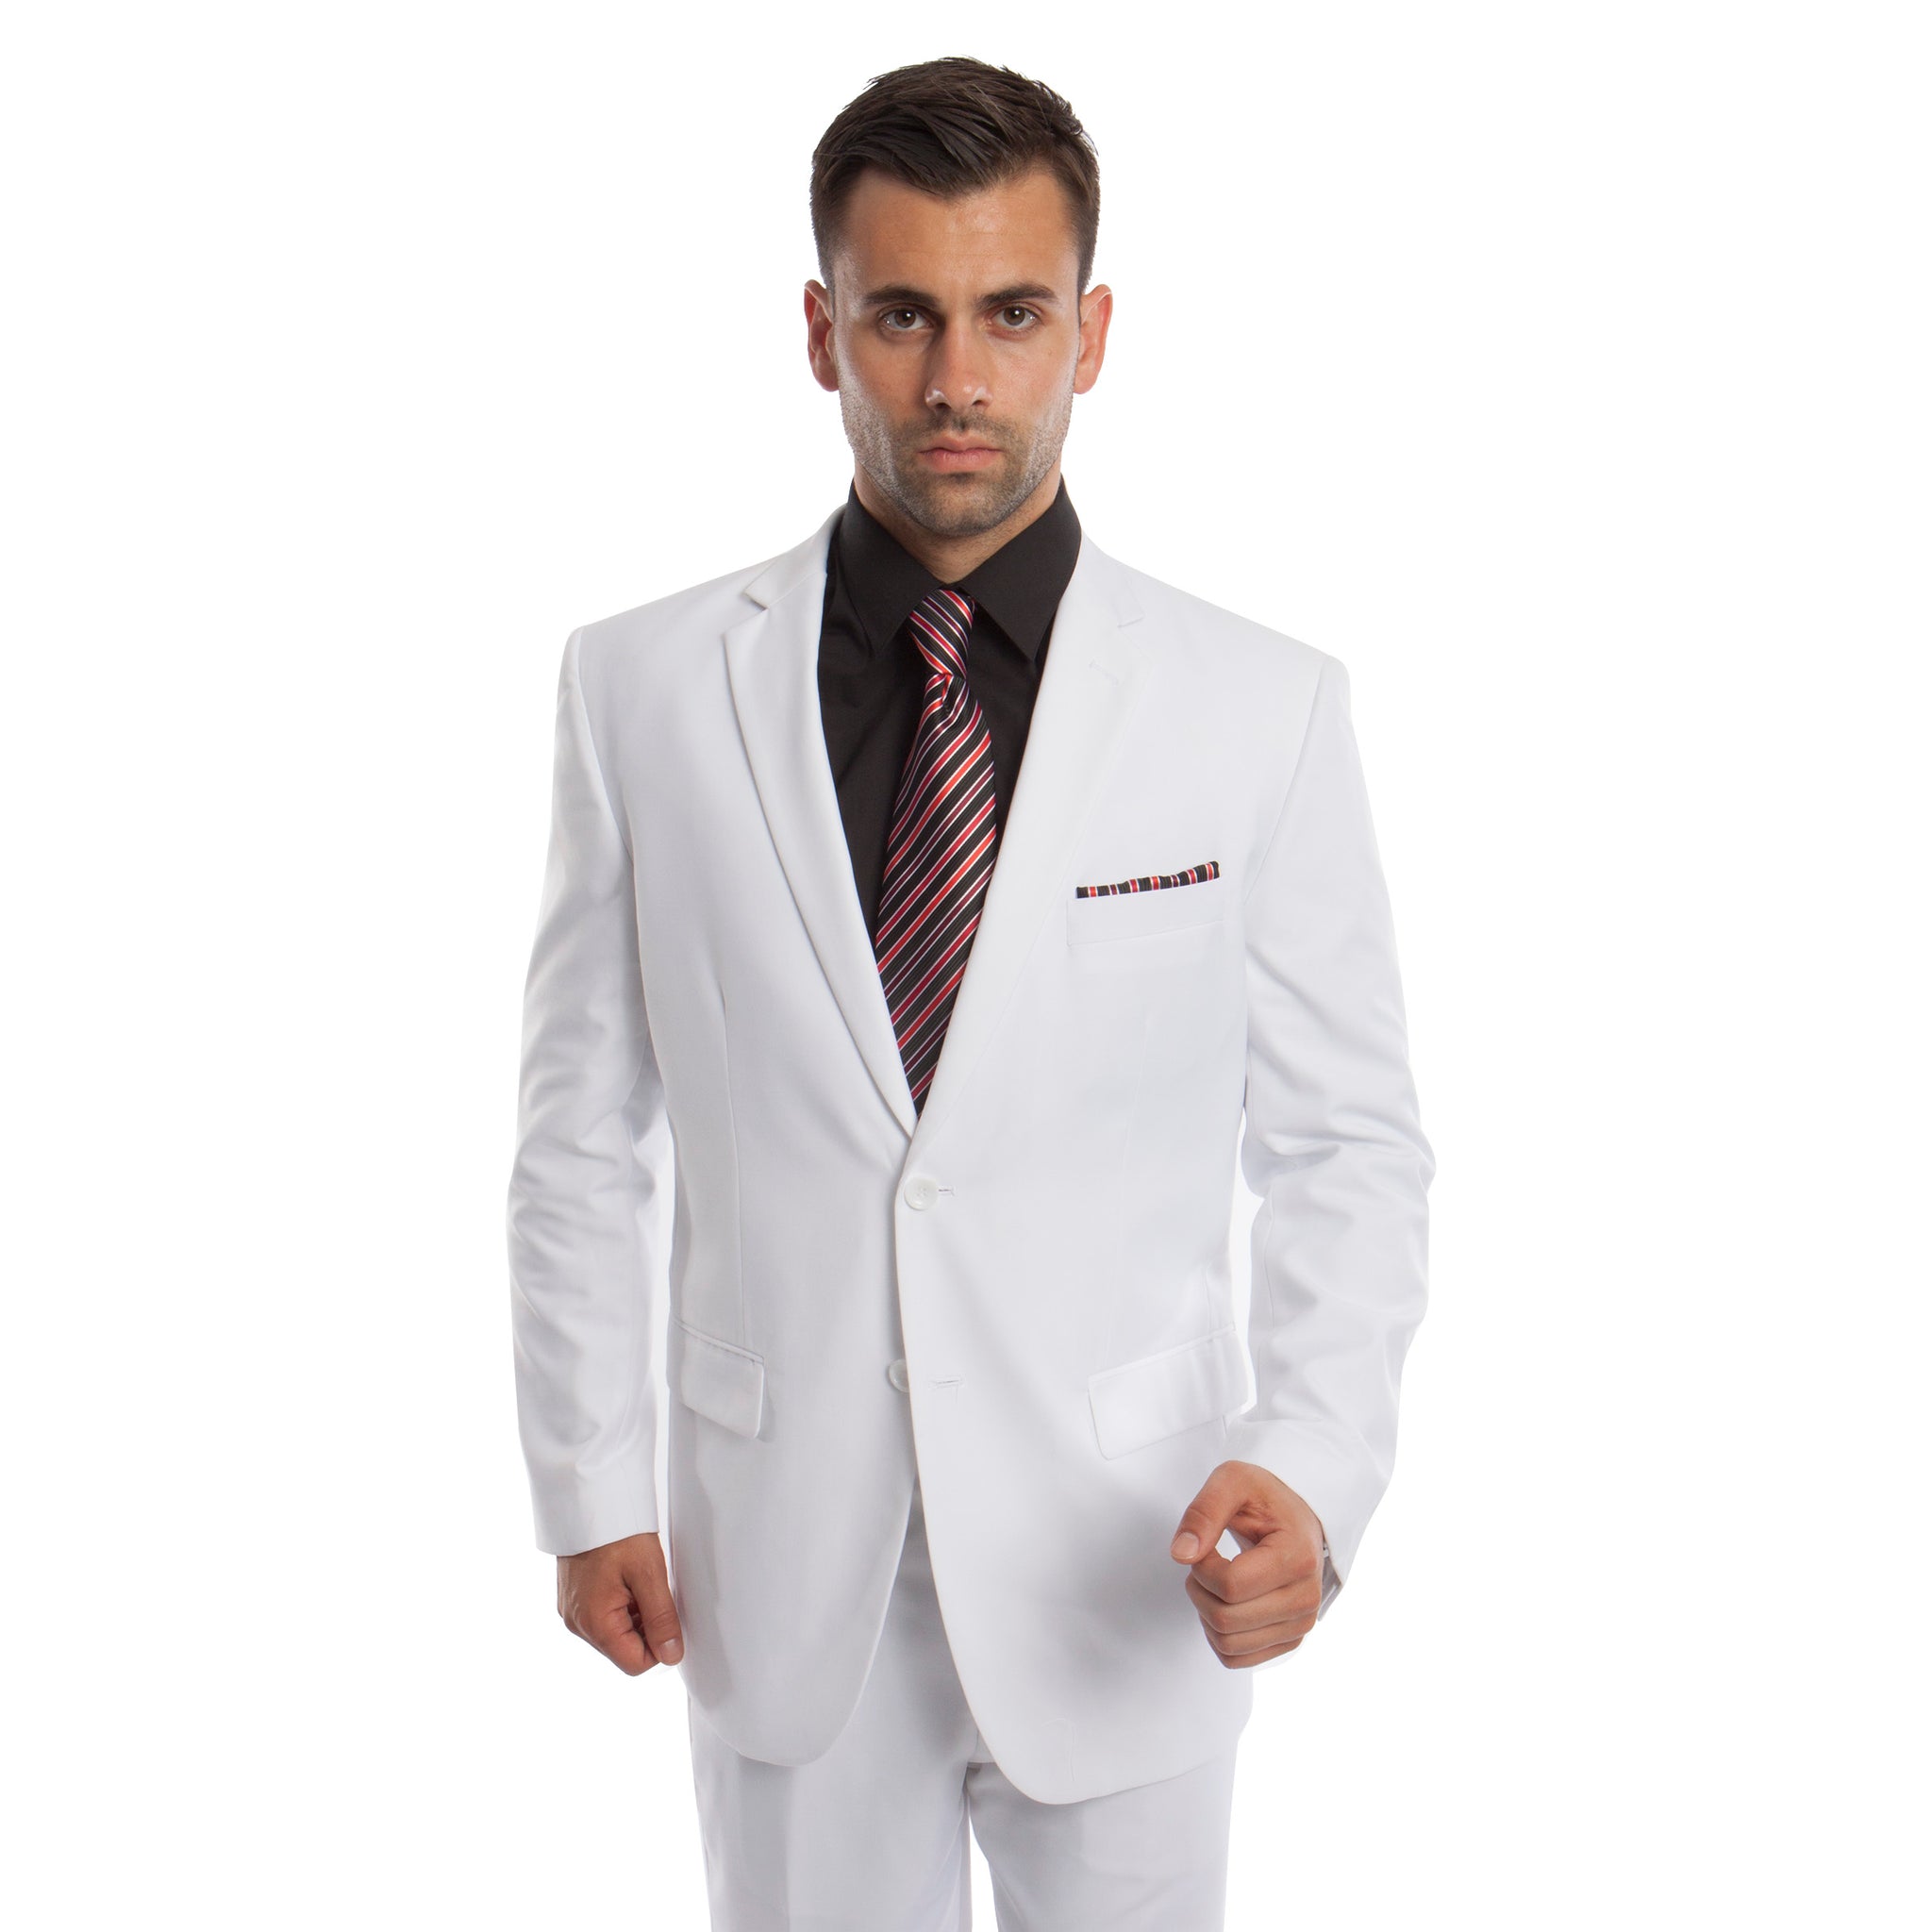 D & K Menswear | Suits, Tuxedos & Accessories in Nashville, TN